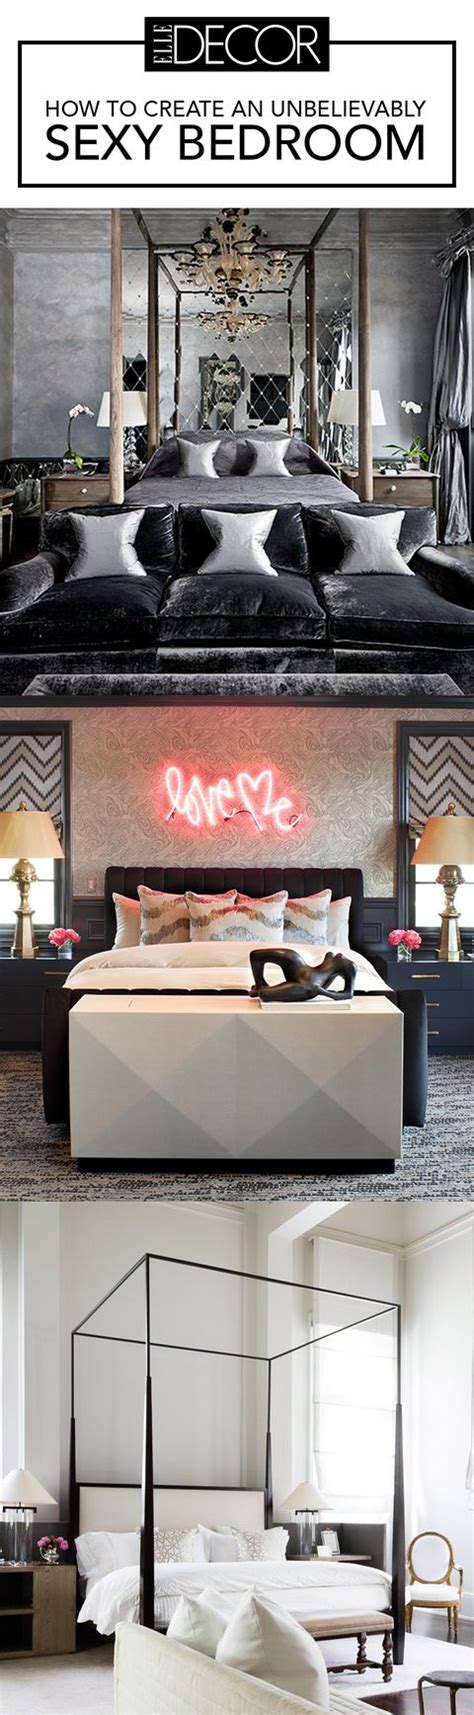 10 Best Romantic Bedroom Ideas Sexy Bedroom Decorating Pictures